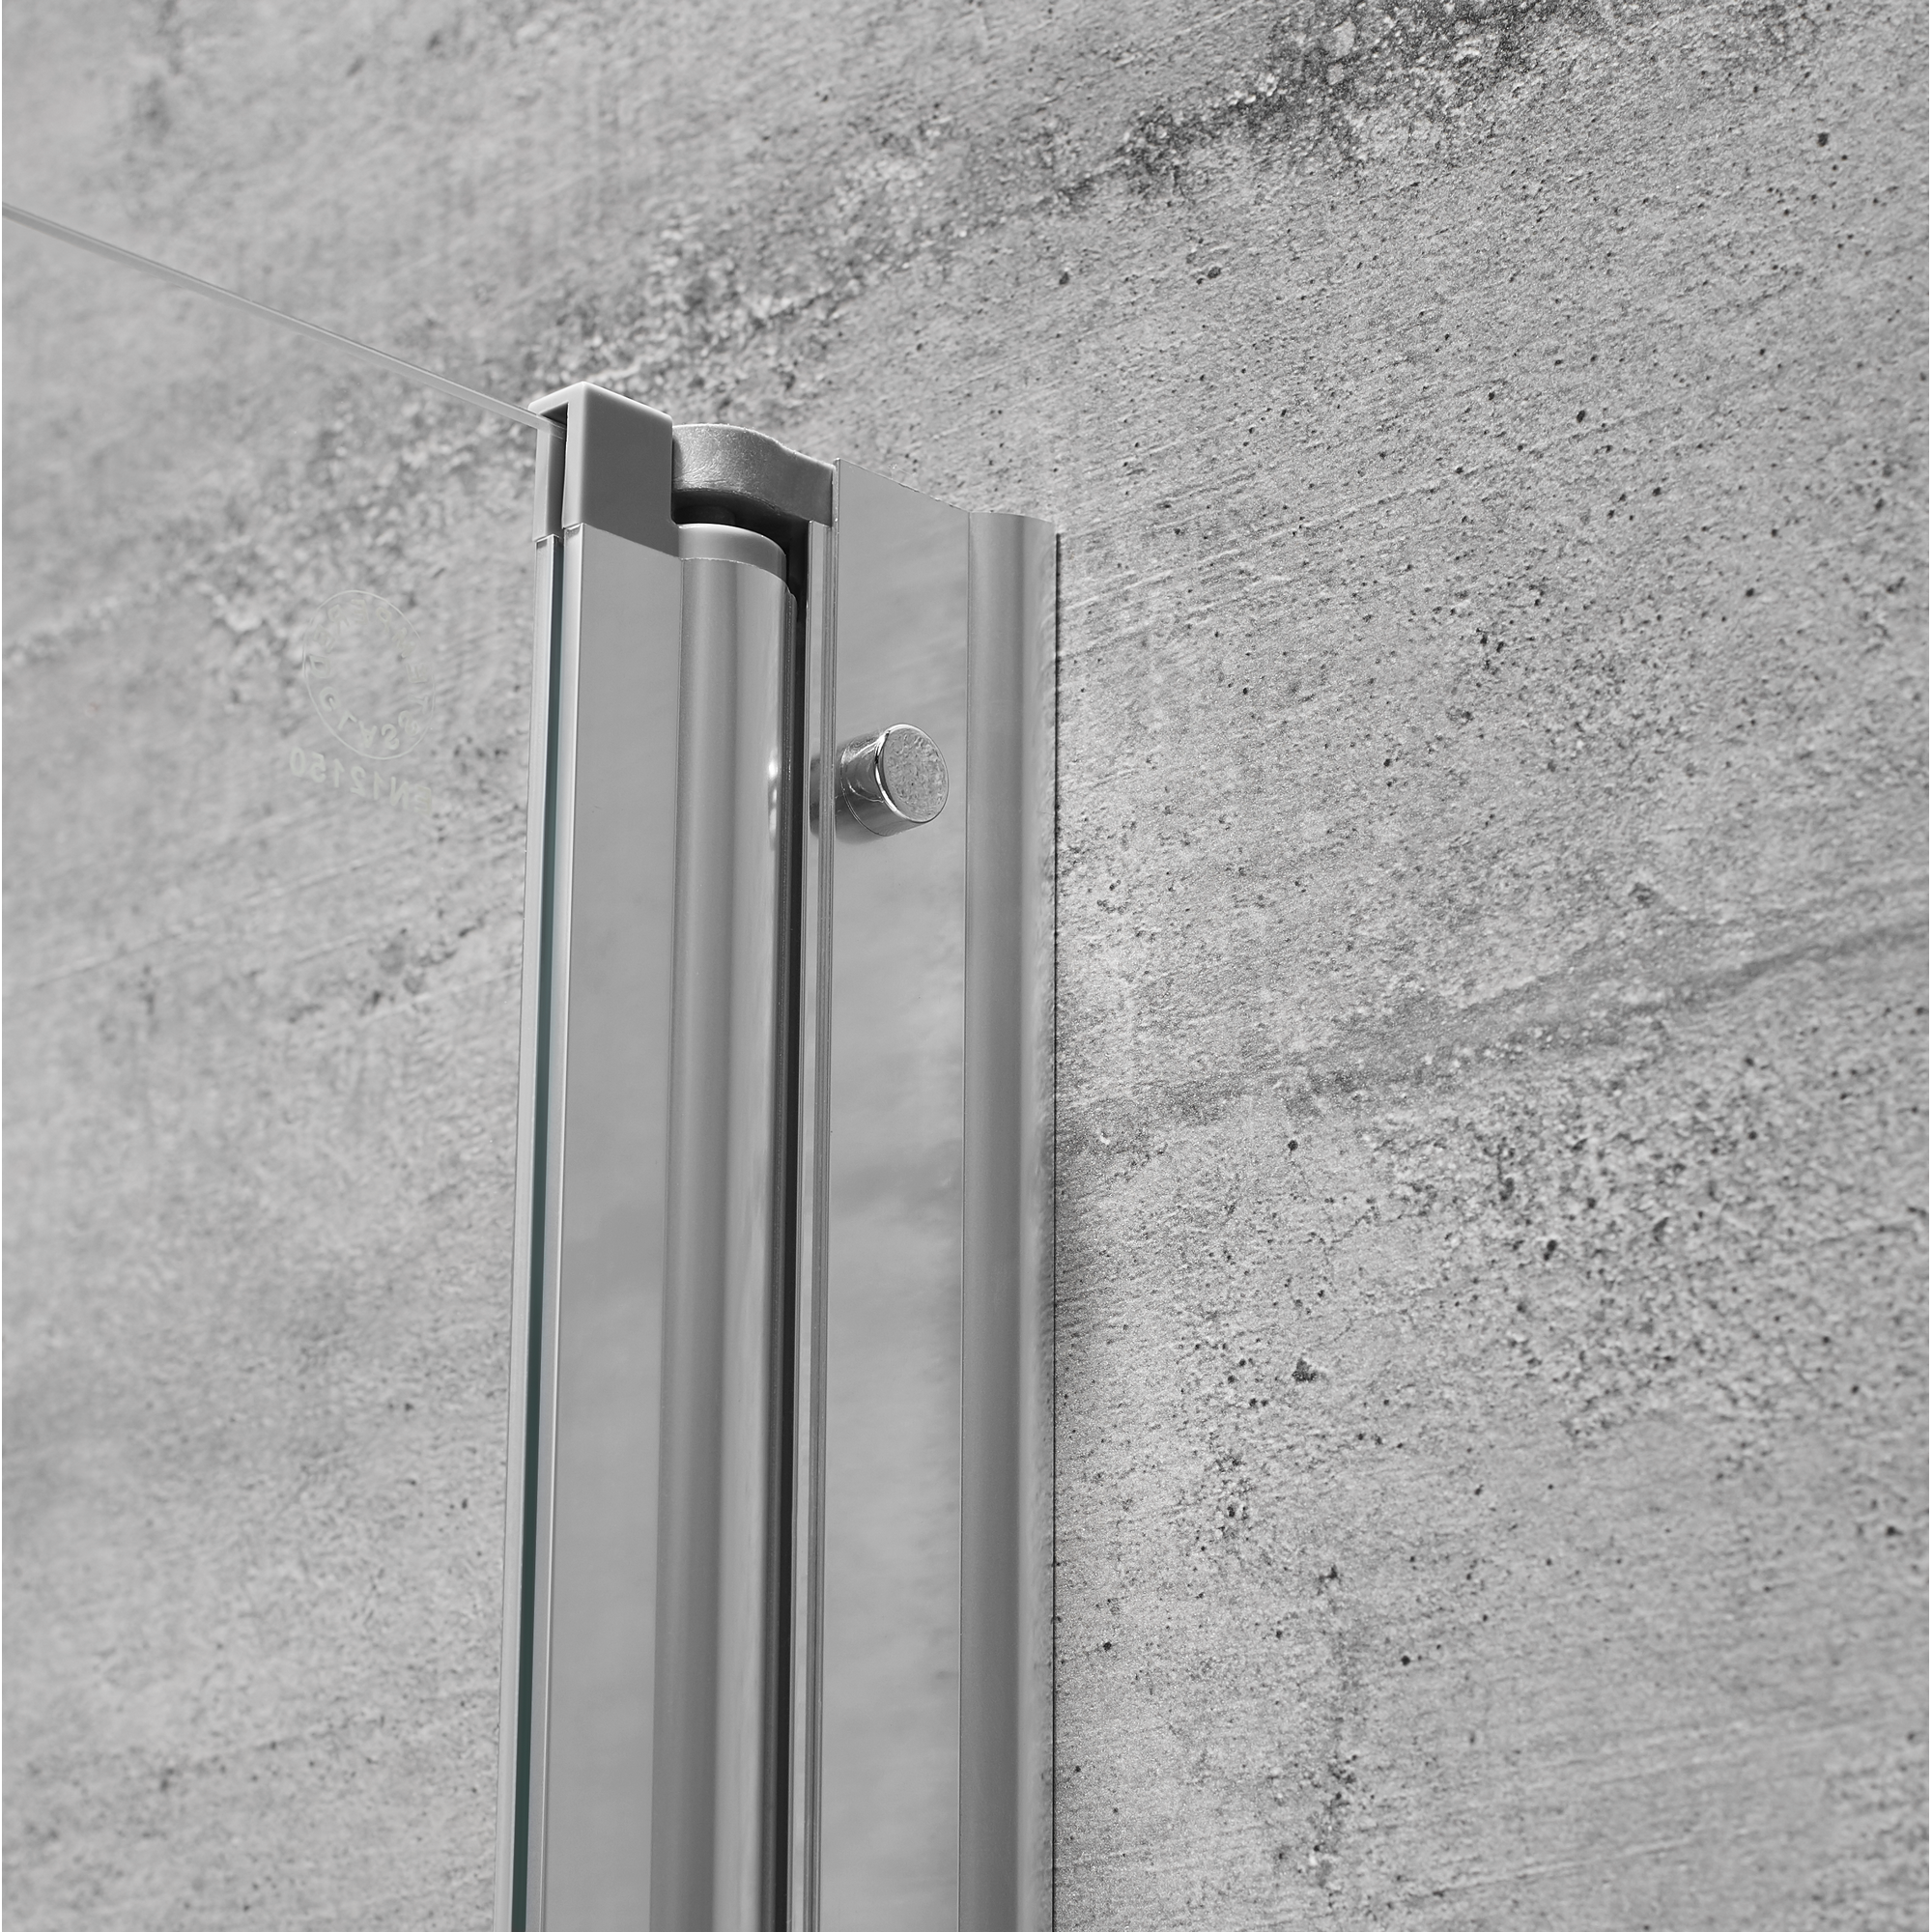 Badewannenfaltwand teilgerahmt, aluminiumfarben, 75 x 140 cm, 1-teilig + product picture